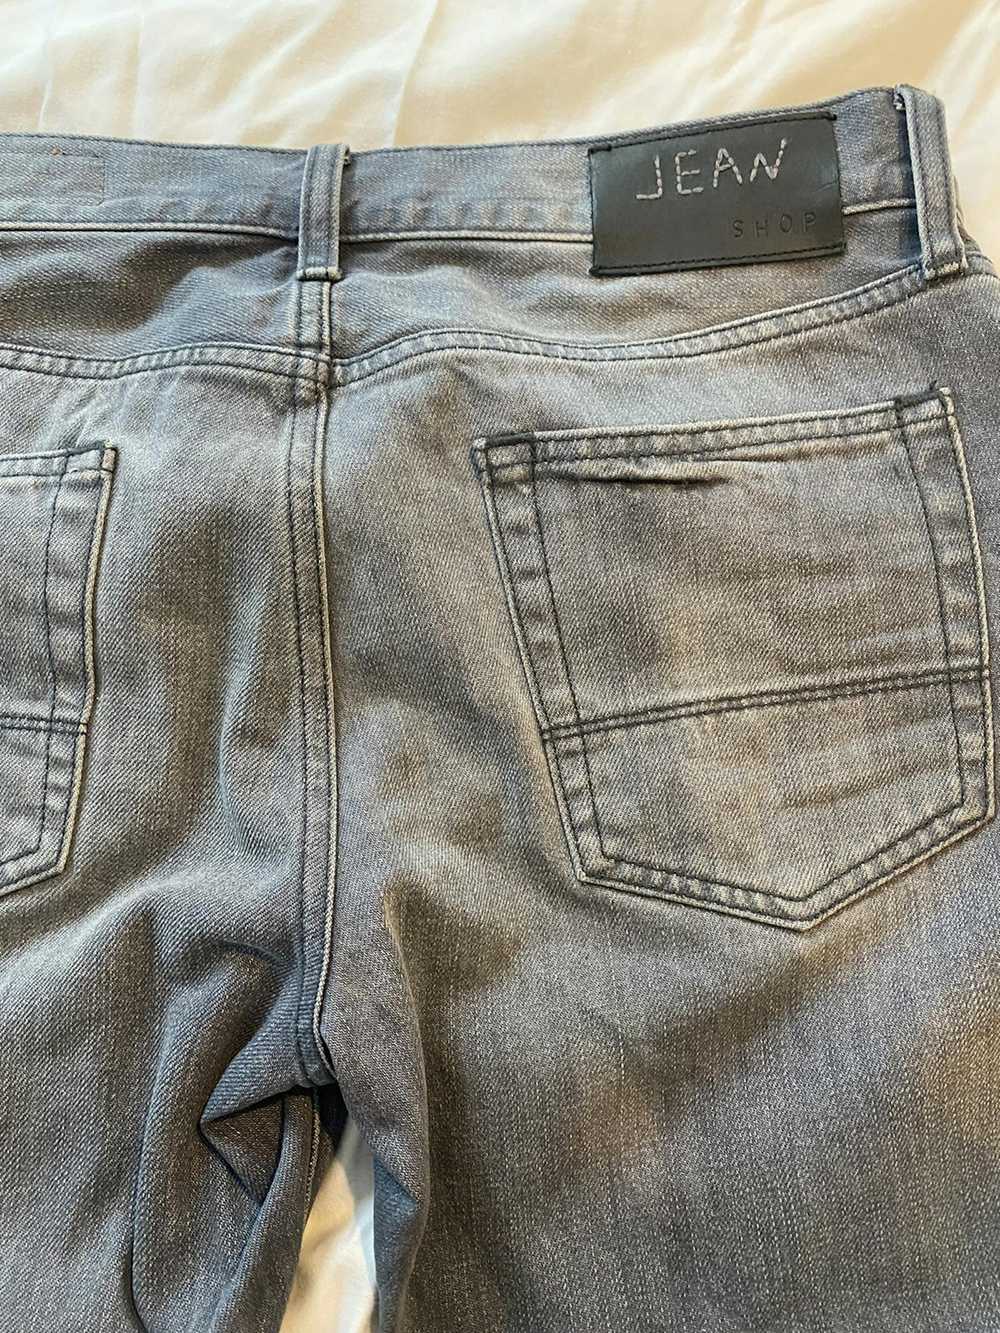 Jean Shop Grey slim fit Jean Shop jeans - image 4